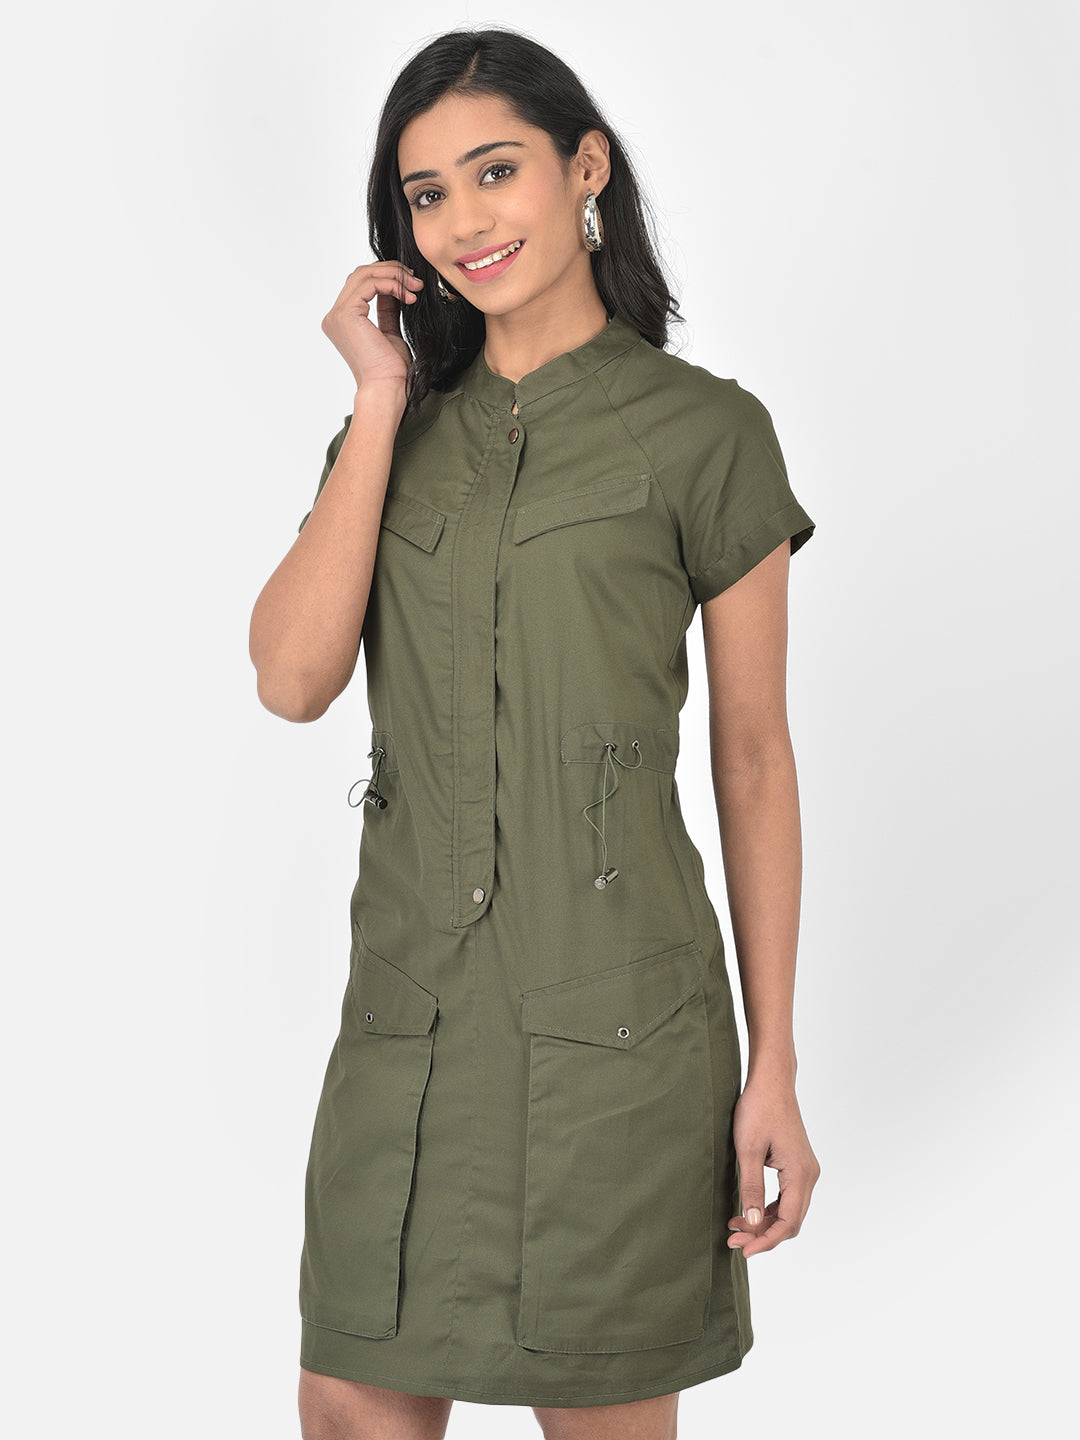 Green Half Sleeve A-Line Solid Dress